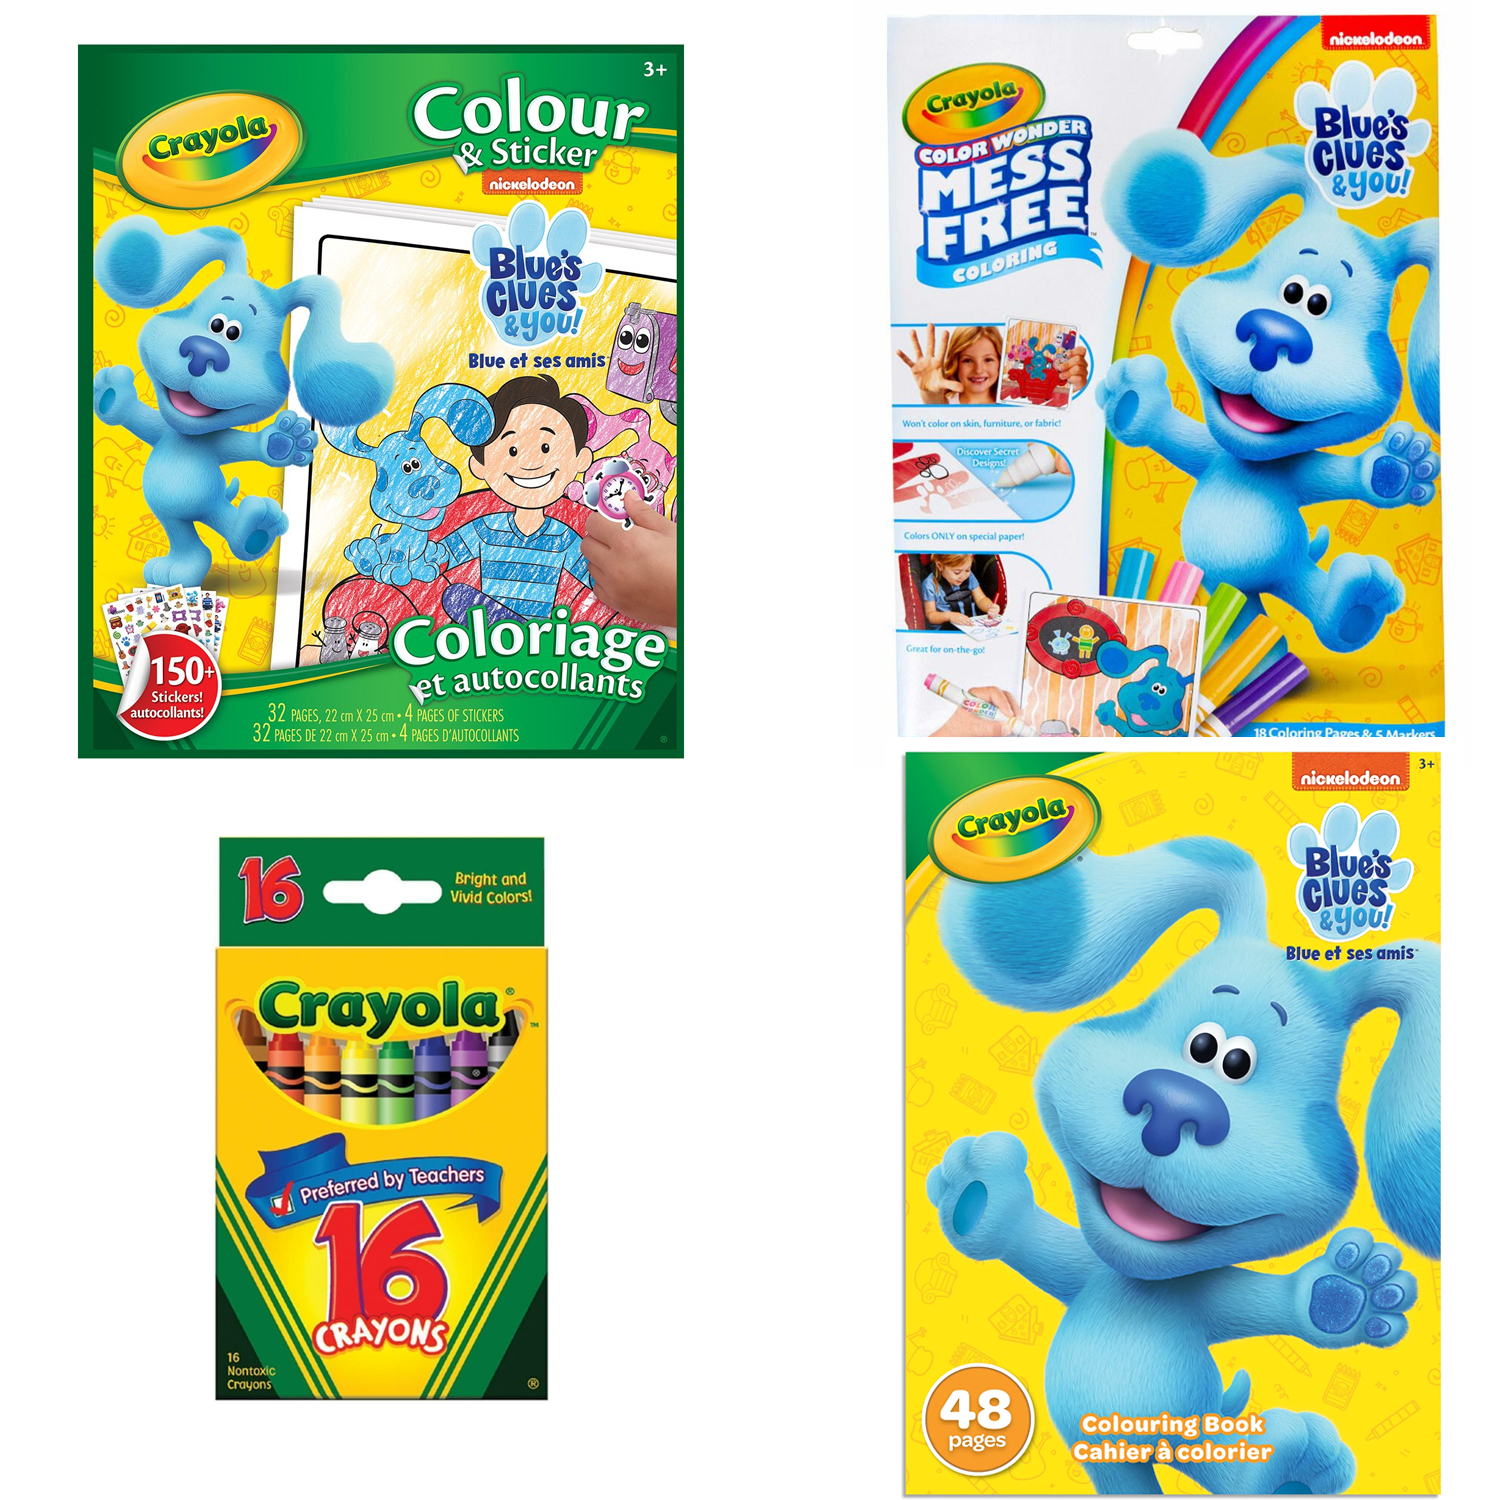 Crayola Color Wonder Mess Free Coloring - Shop Books & Coloring at